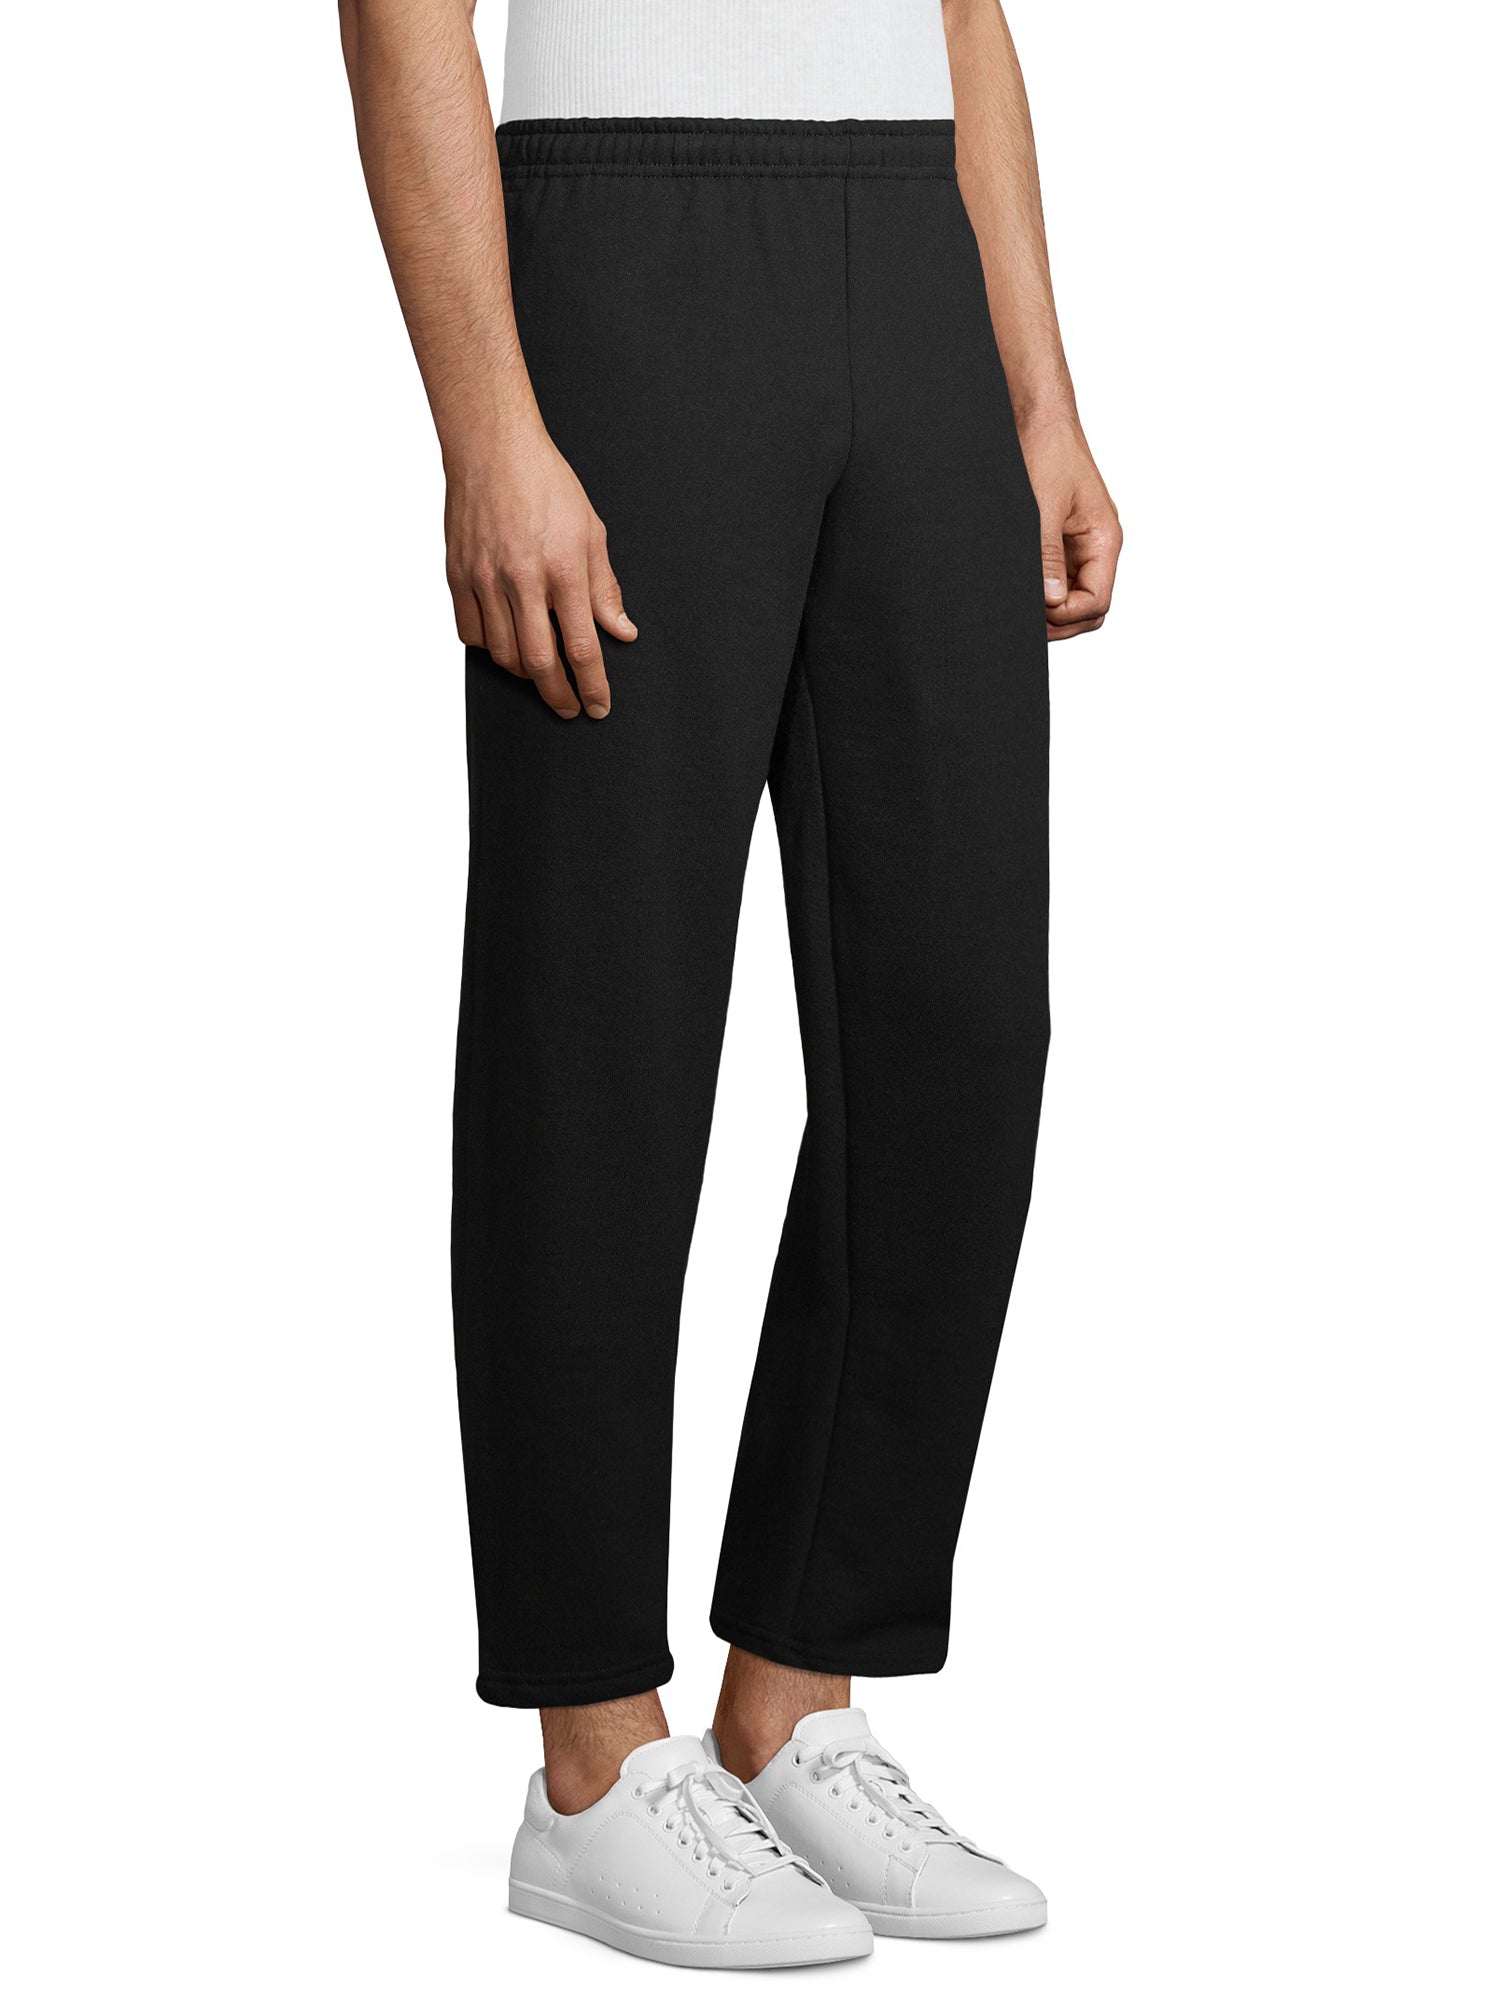 Men's Fleece Open/ Elastic Bottom Pocketed Sweatpants, up to Size 2XL